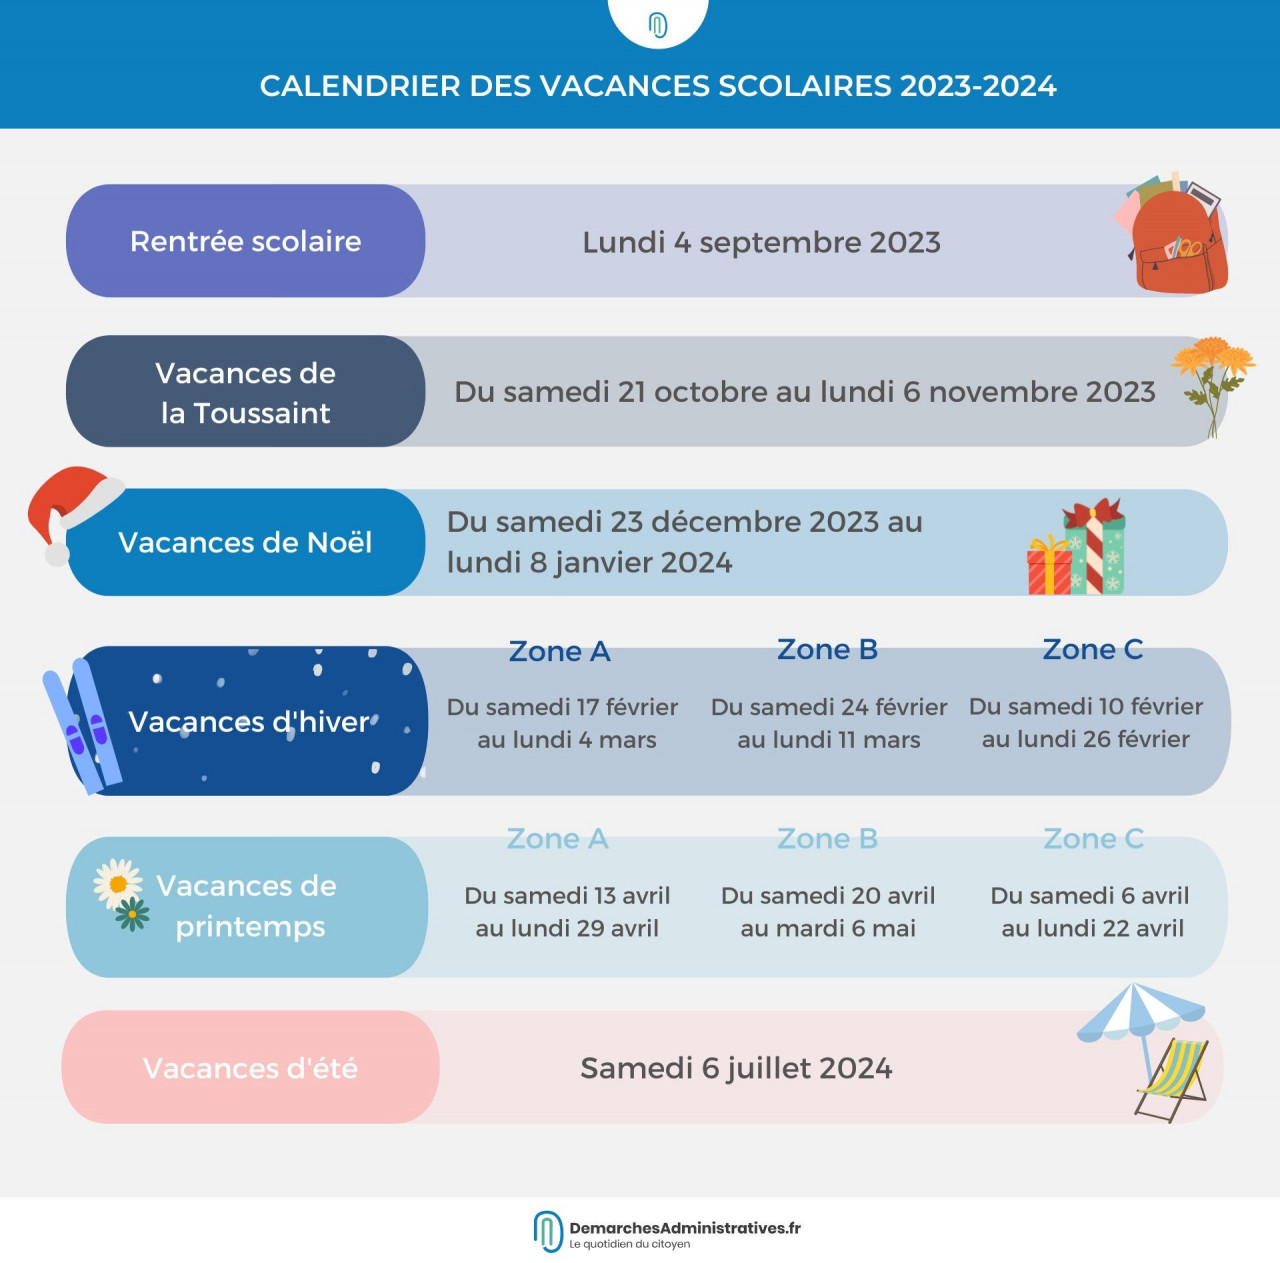 Vacances Scolaires 2023 Et 2024 France Zone B Image to u